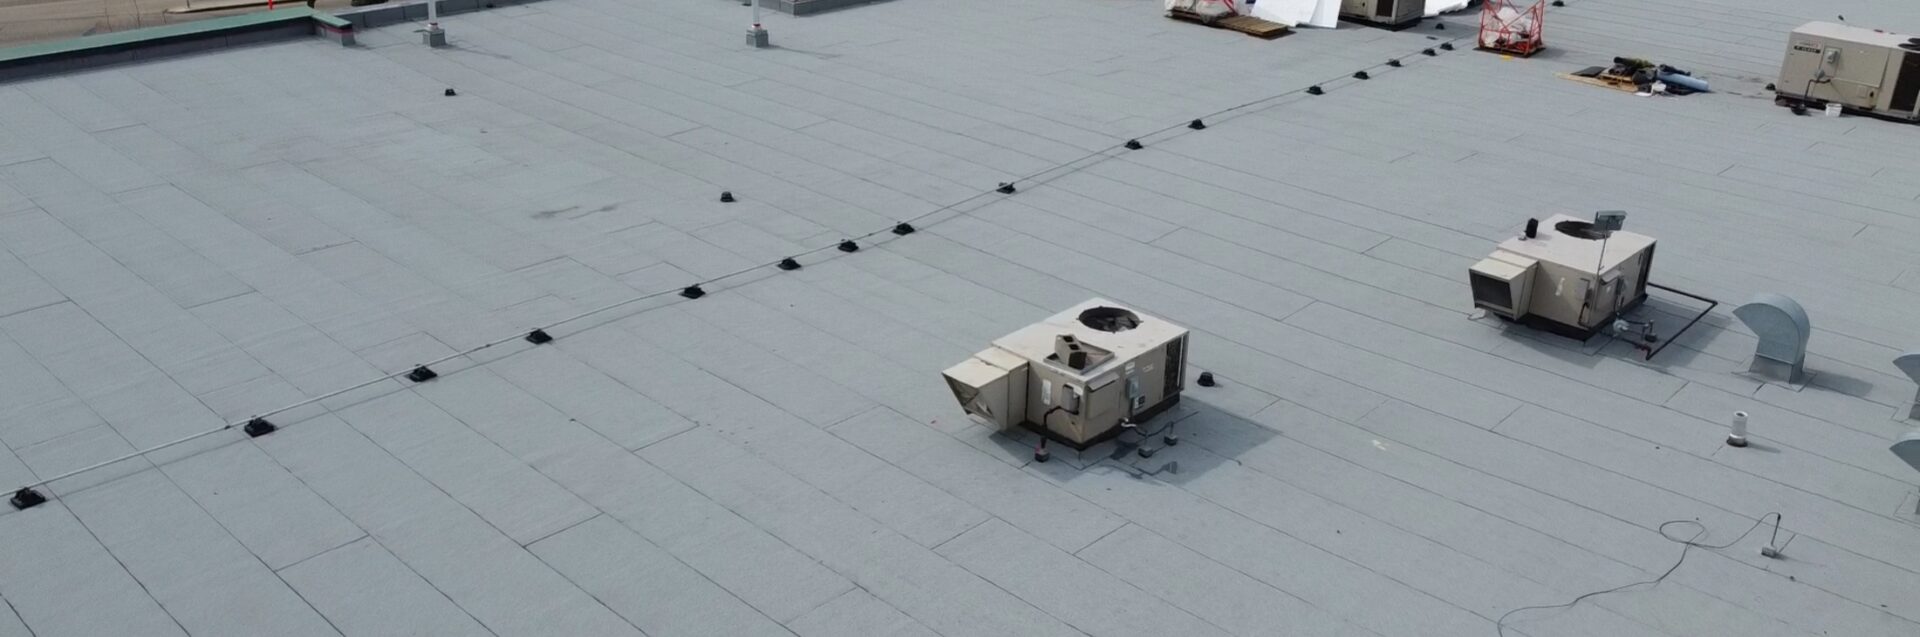 Edmonton Commercial Roofing Installation, Roof Repair in Alberta